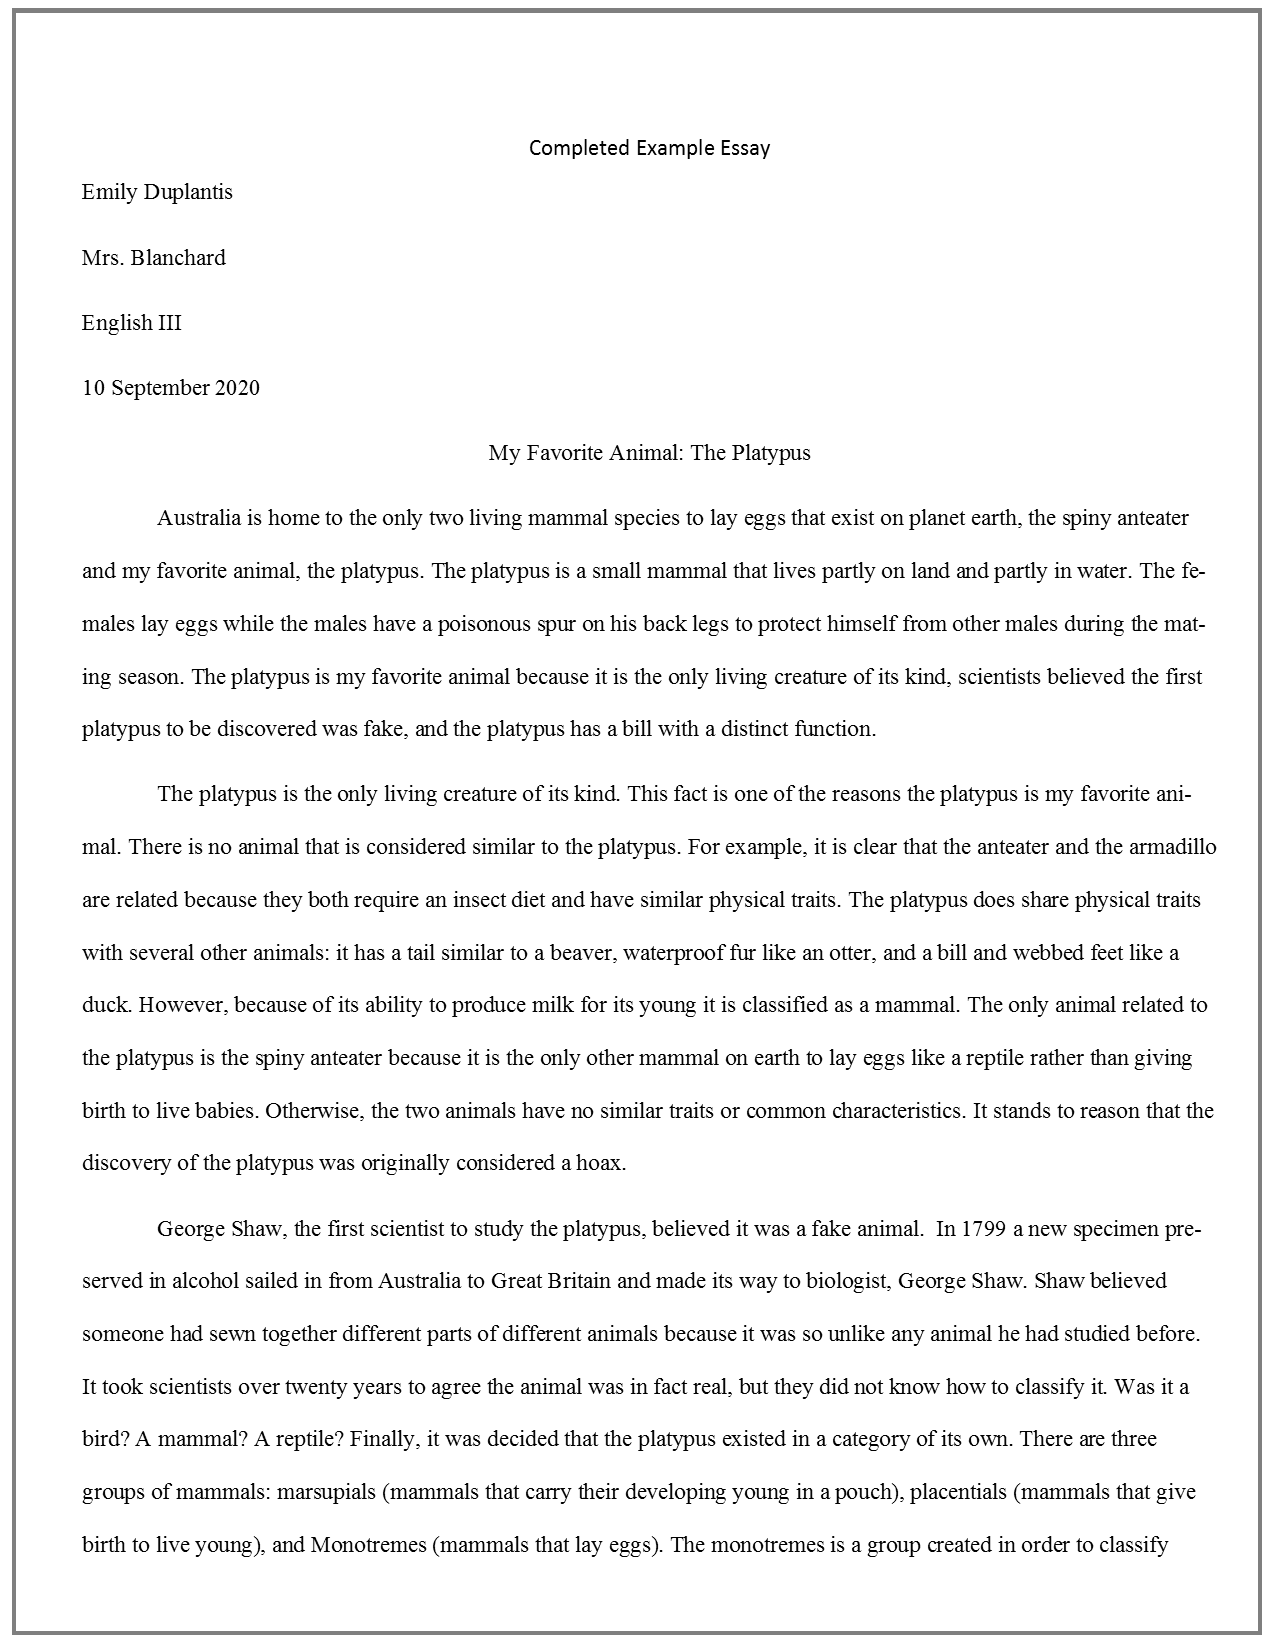 5 paragraph informational essay outline